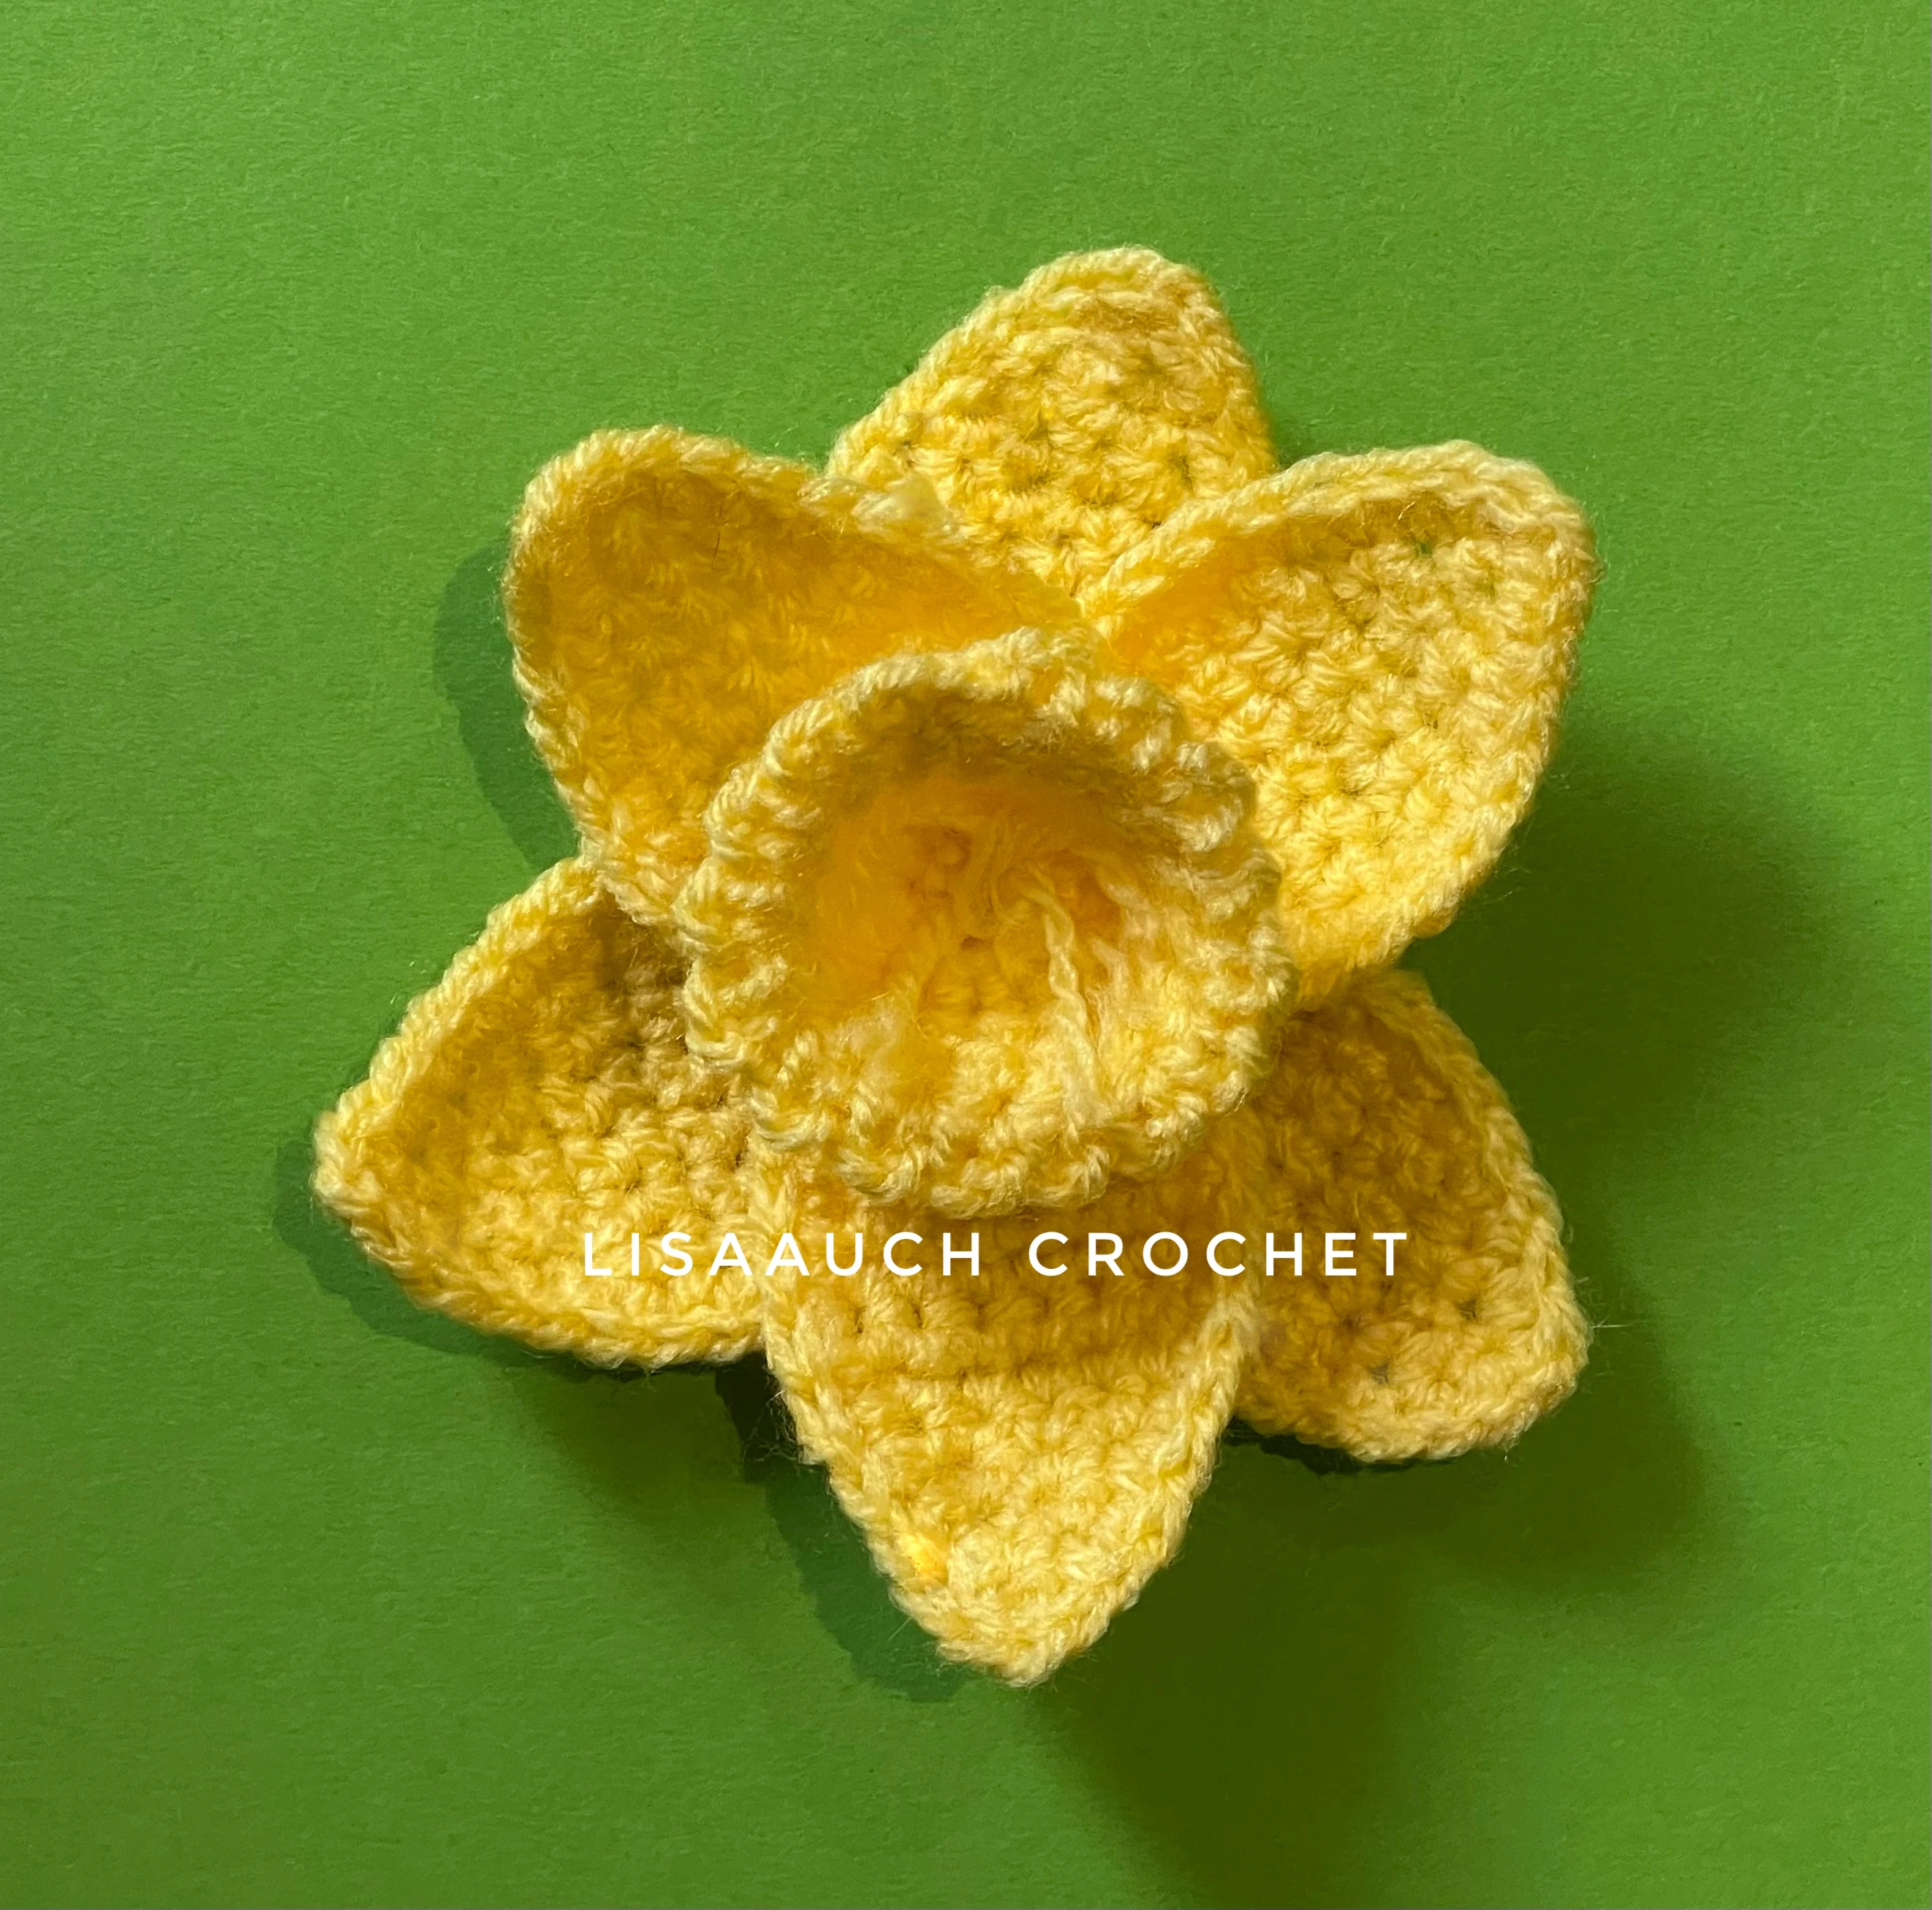 crochet daffodil pattern free Dafodil crochet pattern, crochet dafodil,free crochet dafodil patterns, crochet daffodil pattern free